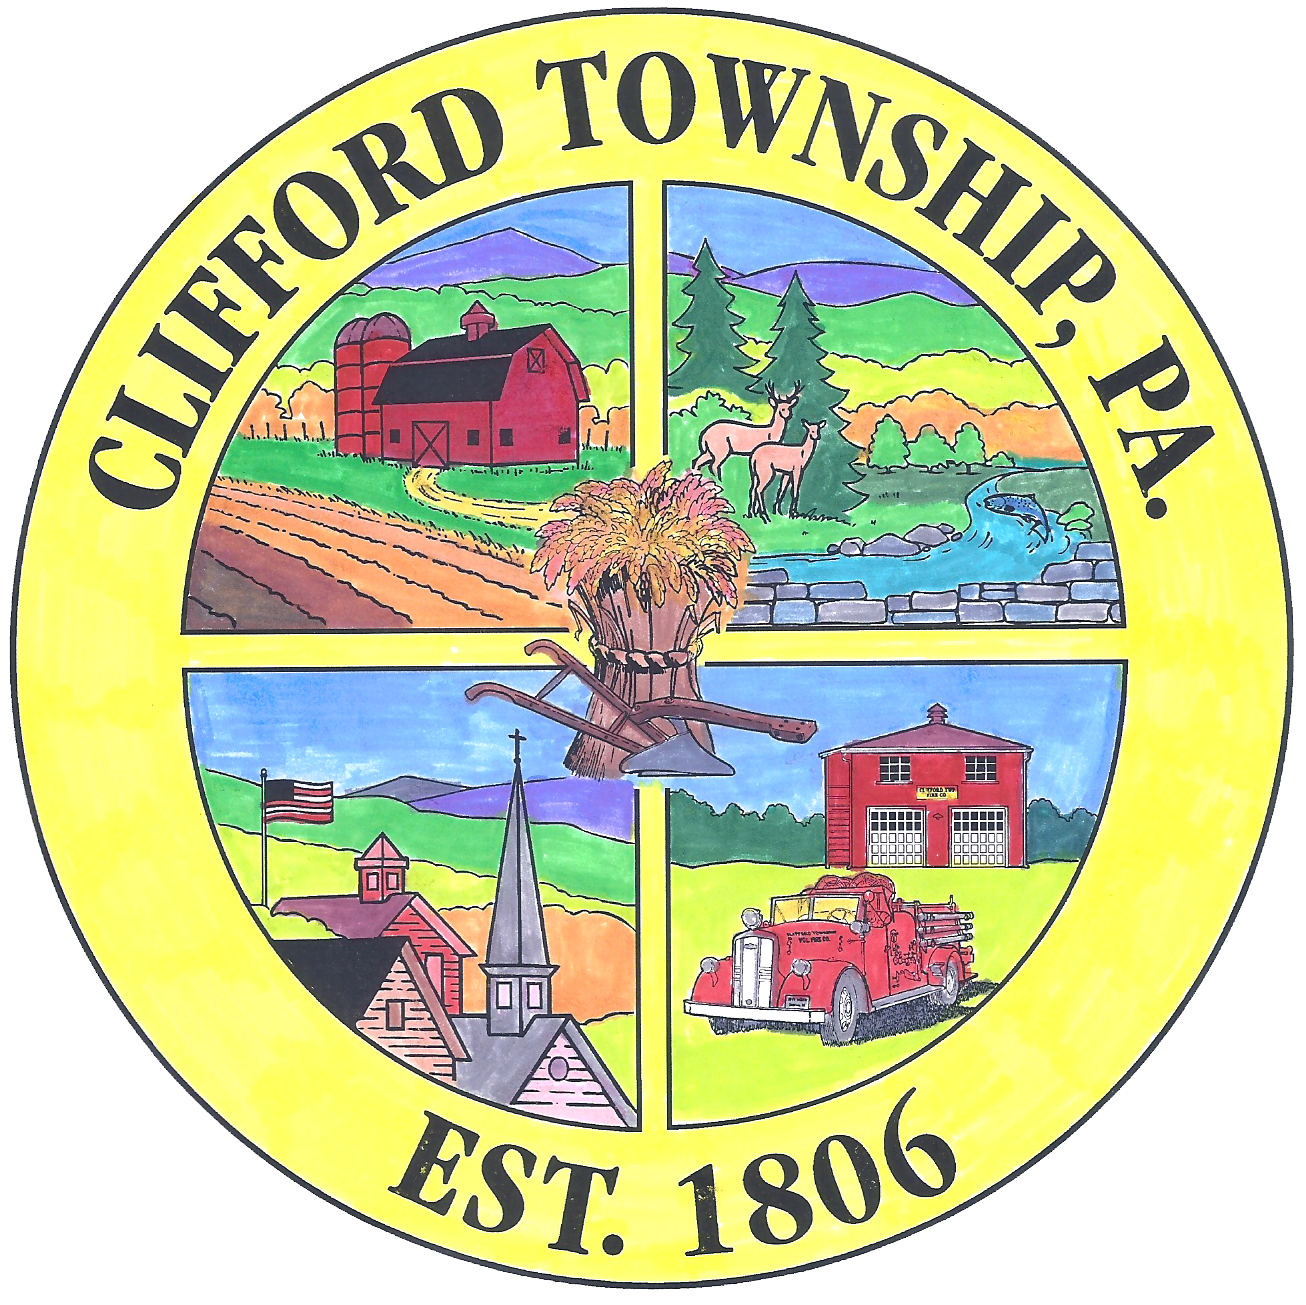 Clifford Township